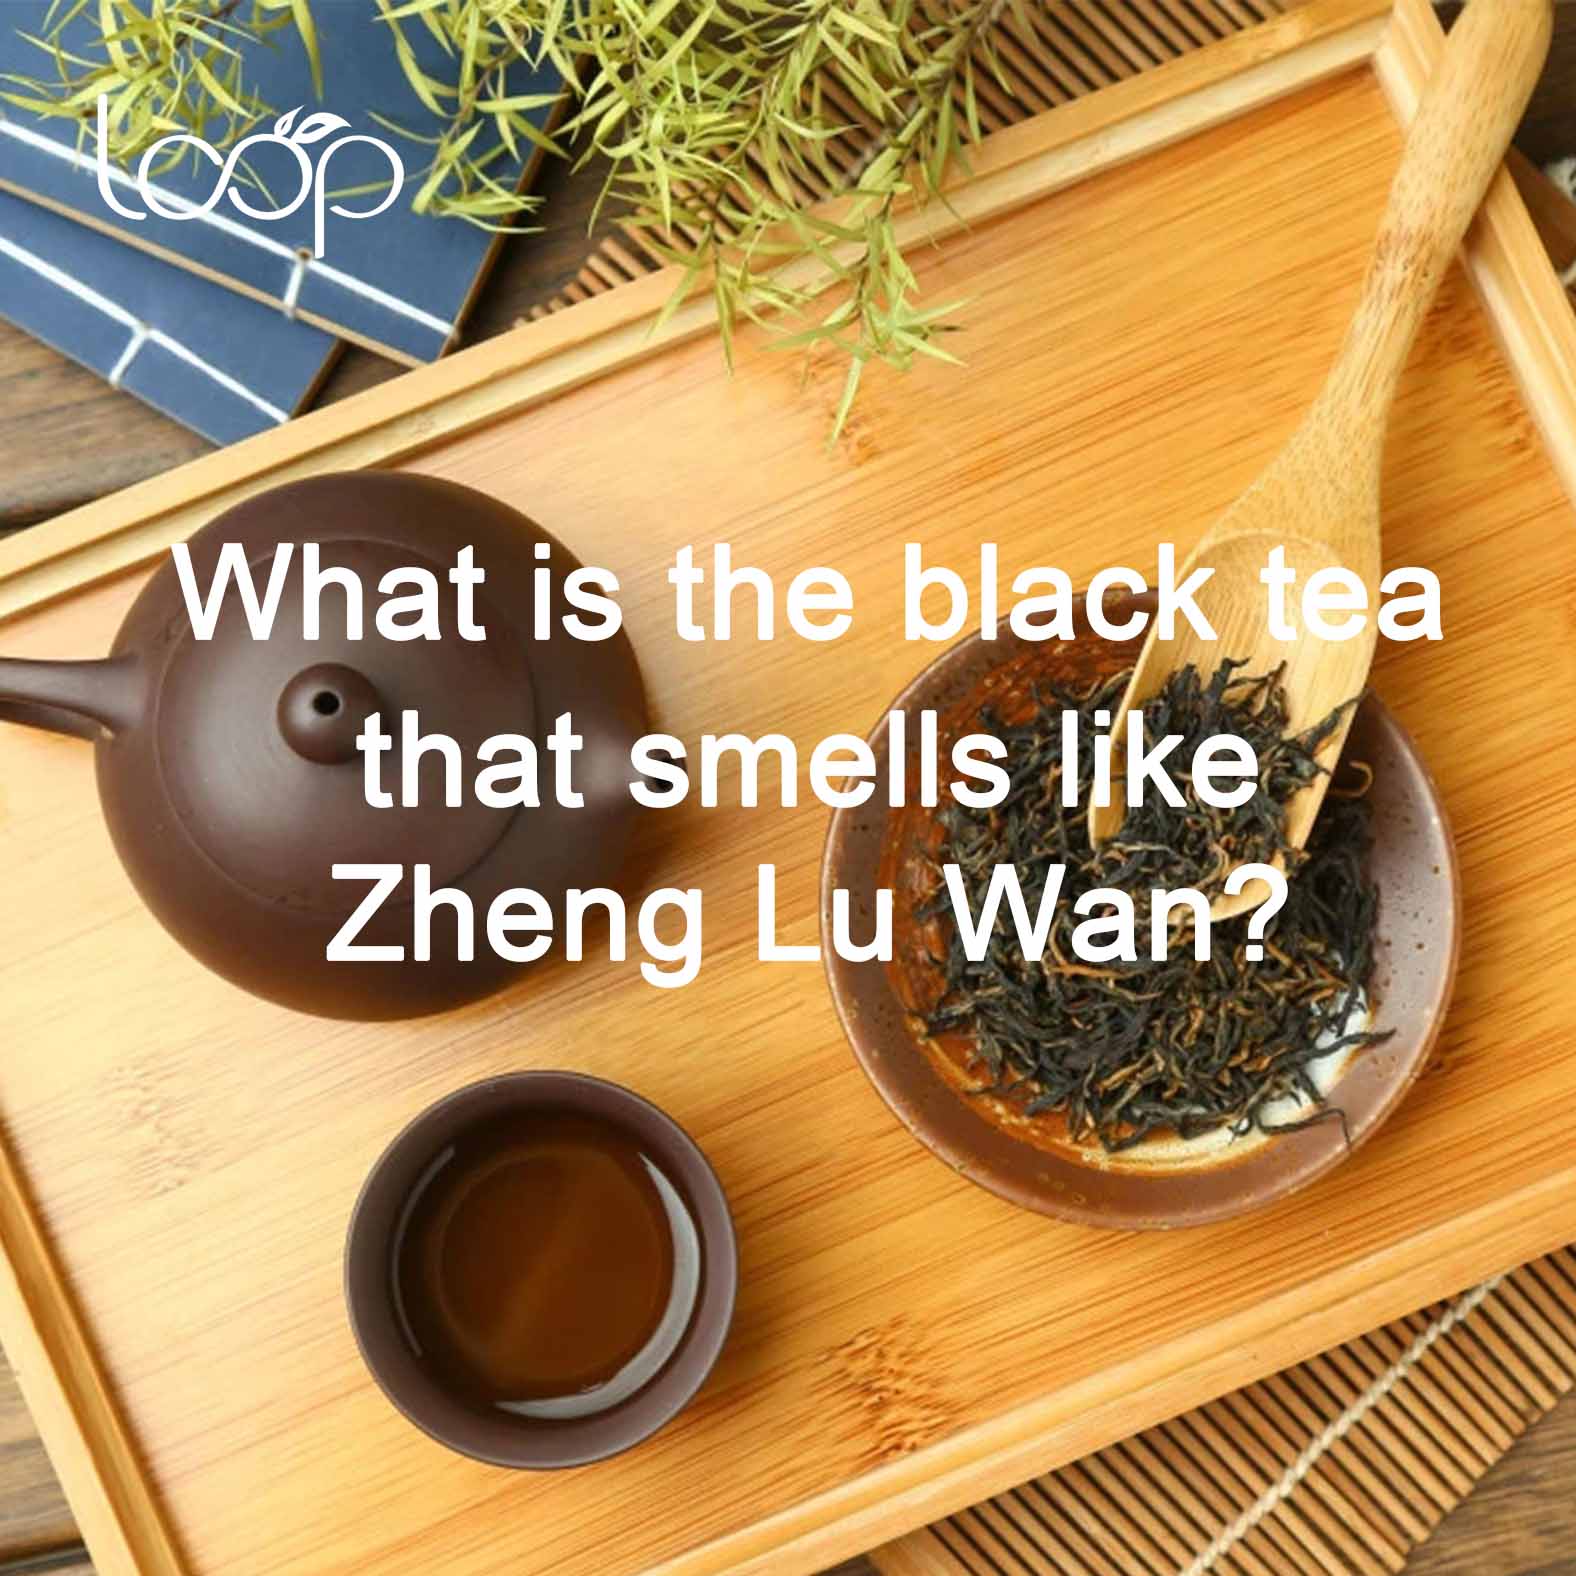 What is the black tea that smells like Zheng Lu Wan?